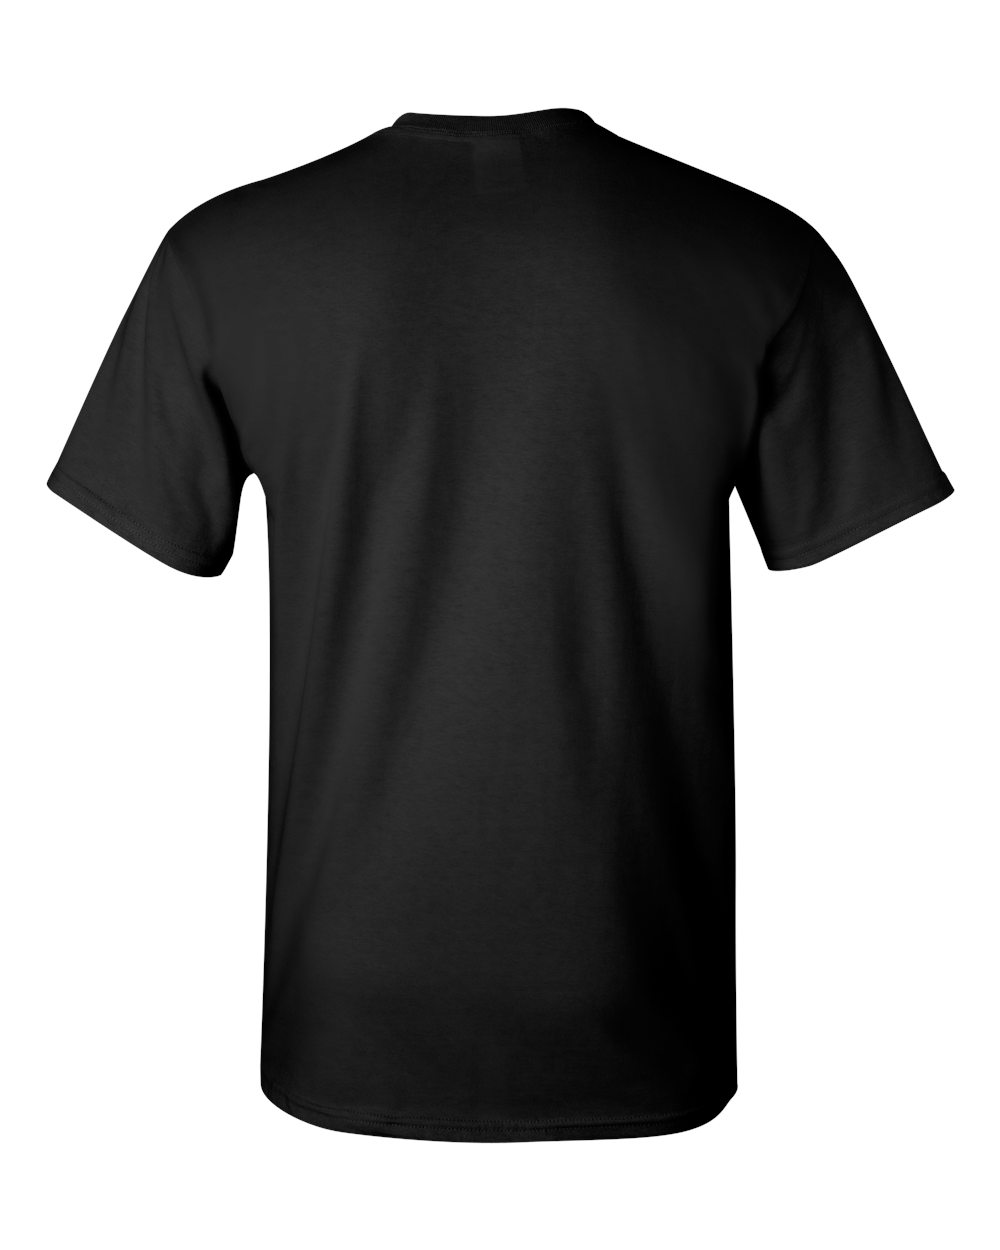 Men's T-Shirt Short Sleeve - Dallas - image 4 of 5